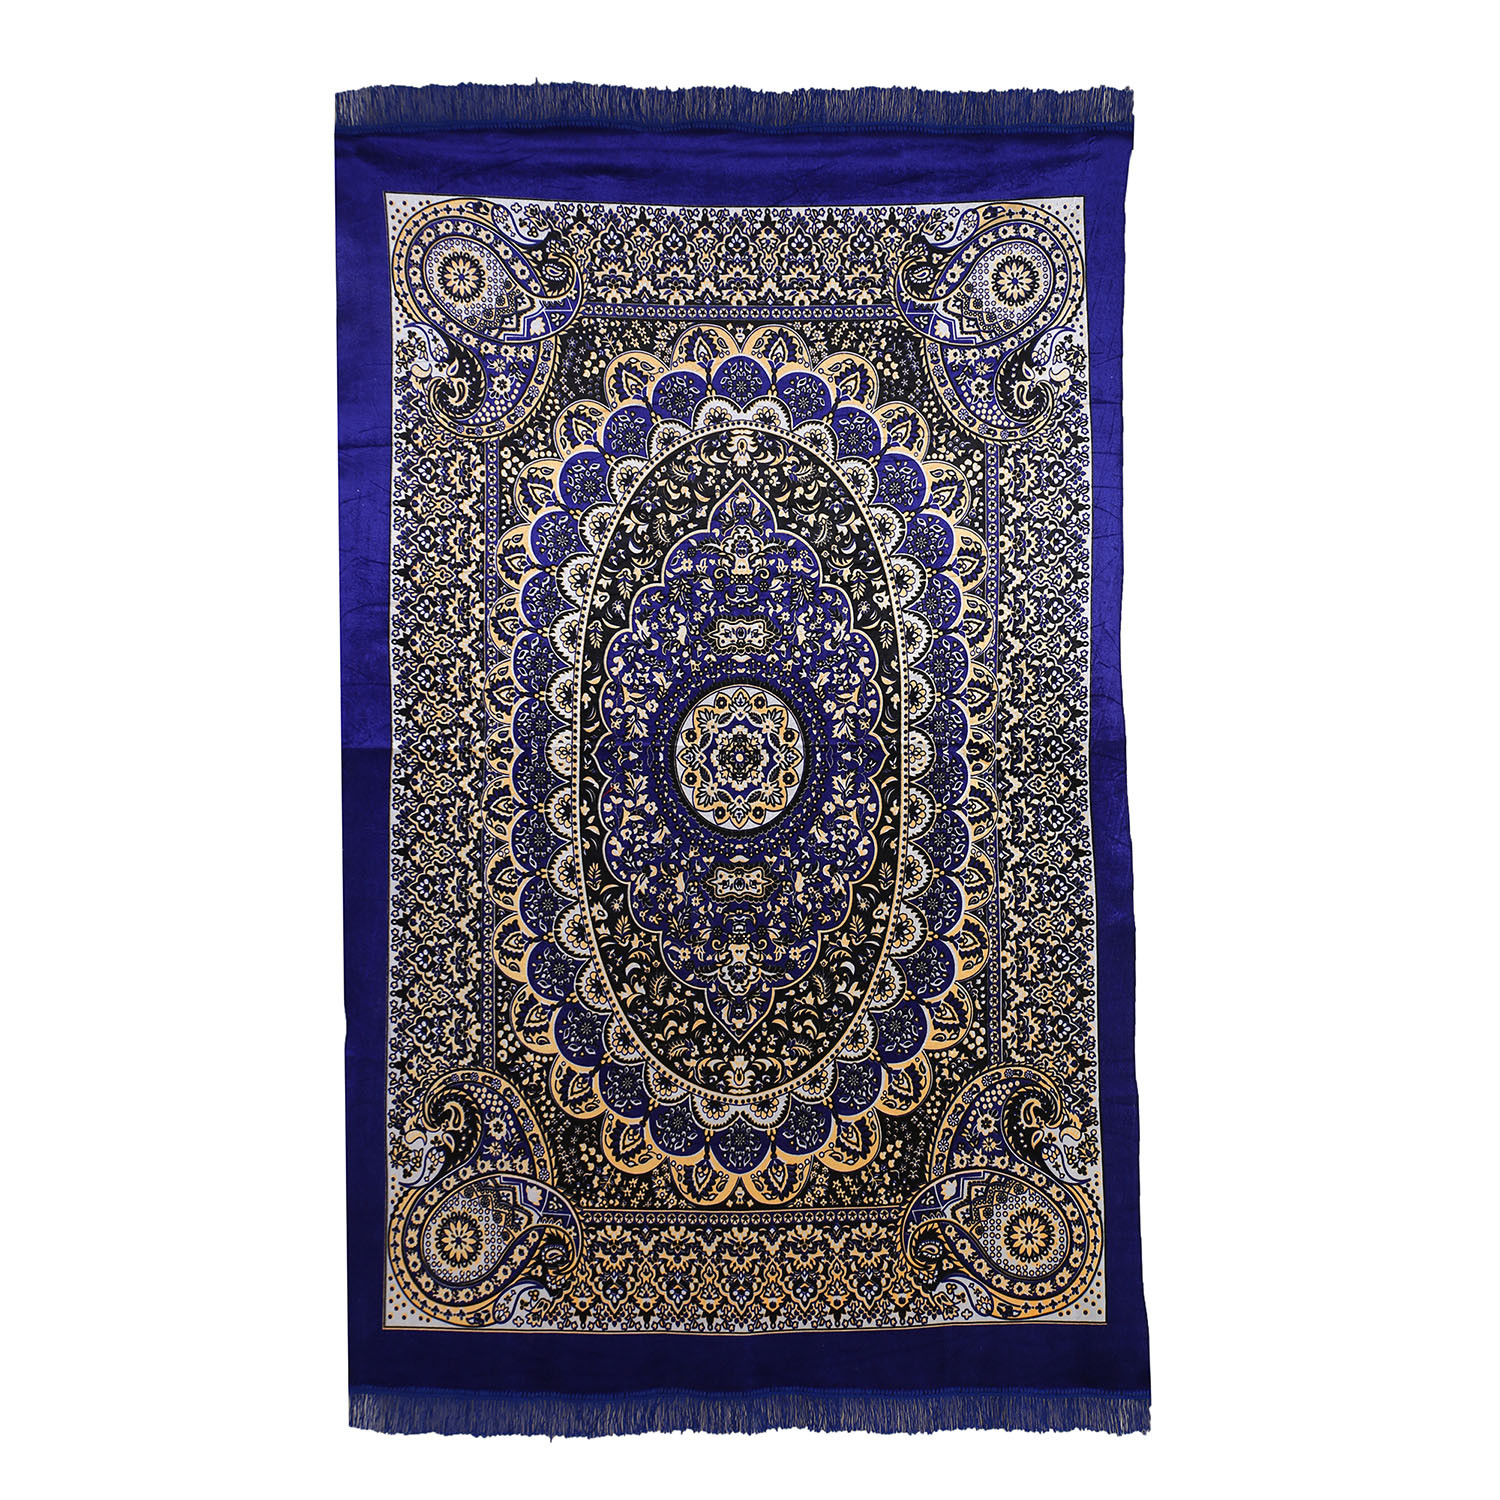 Kuber Industries Carpet|Water Absorption Kalamkari Paisley Pattern Floor Mat|Velvet Sitting Carpet for Hall, Living Room, 5x7 Feet (Navy Blue)